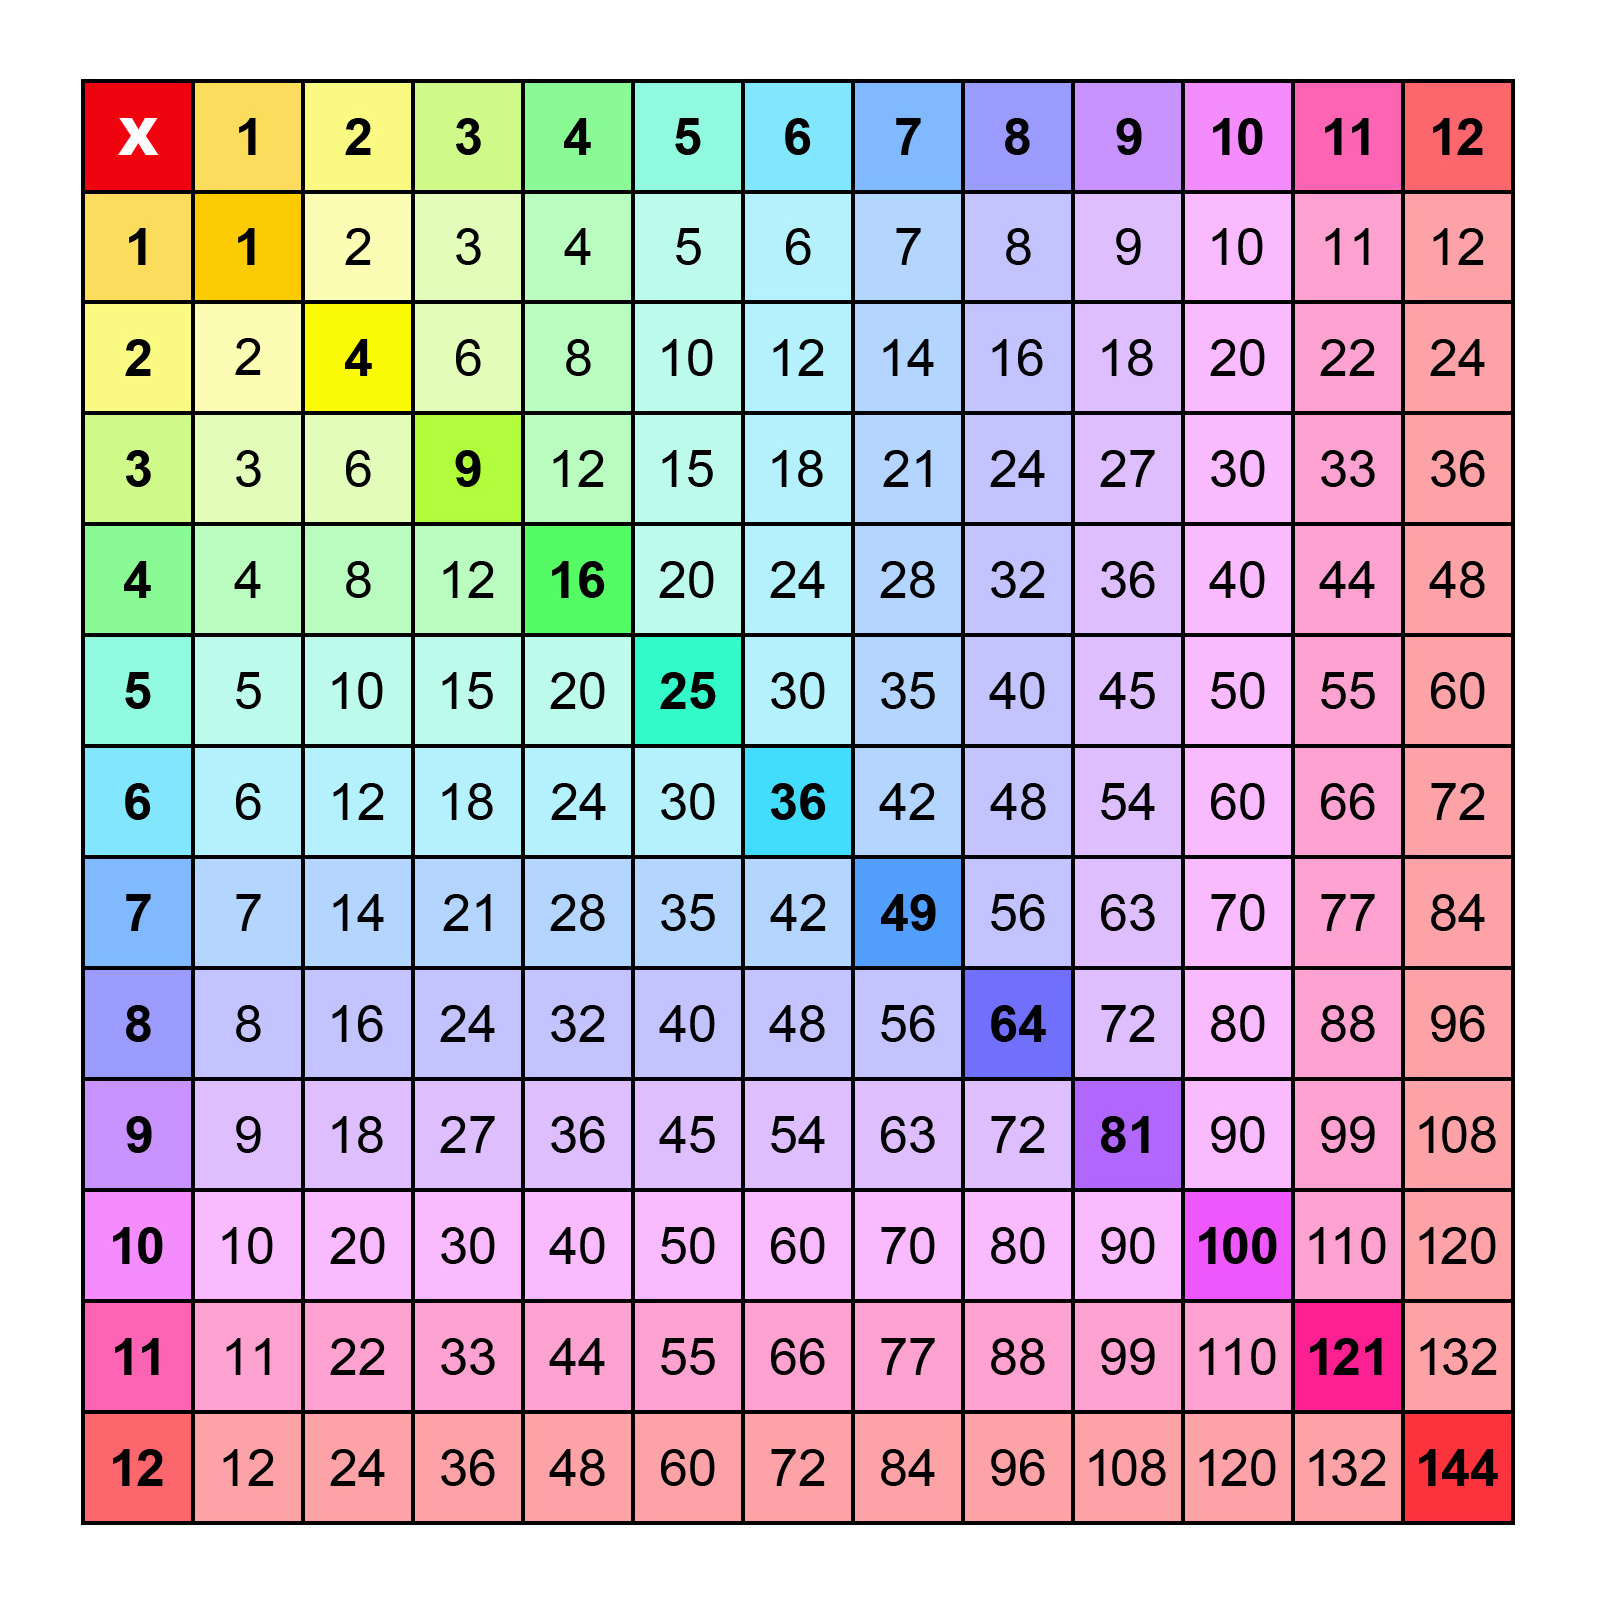 Many Printable multiplication Charts - Free PDF